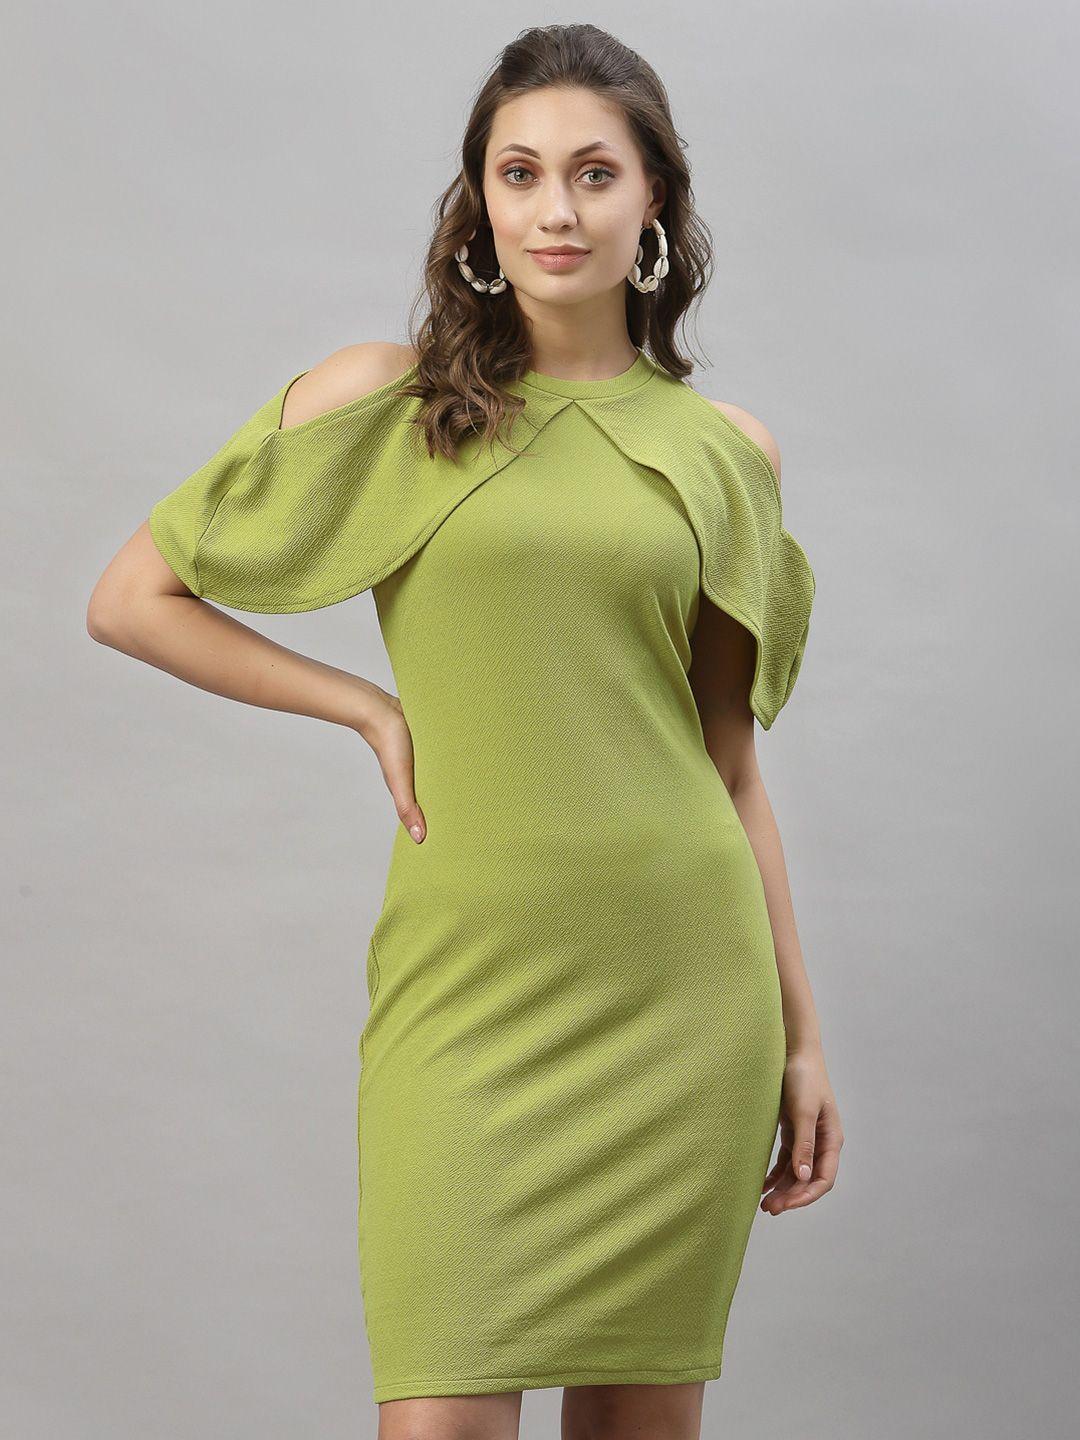 selvia olive green sheath dress